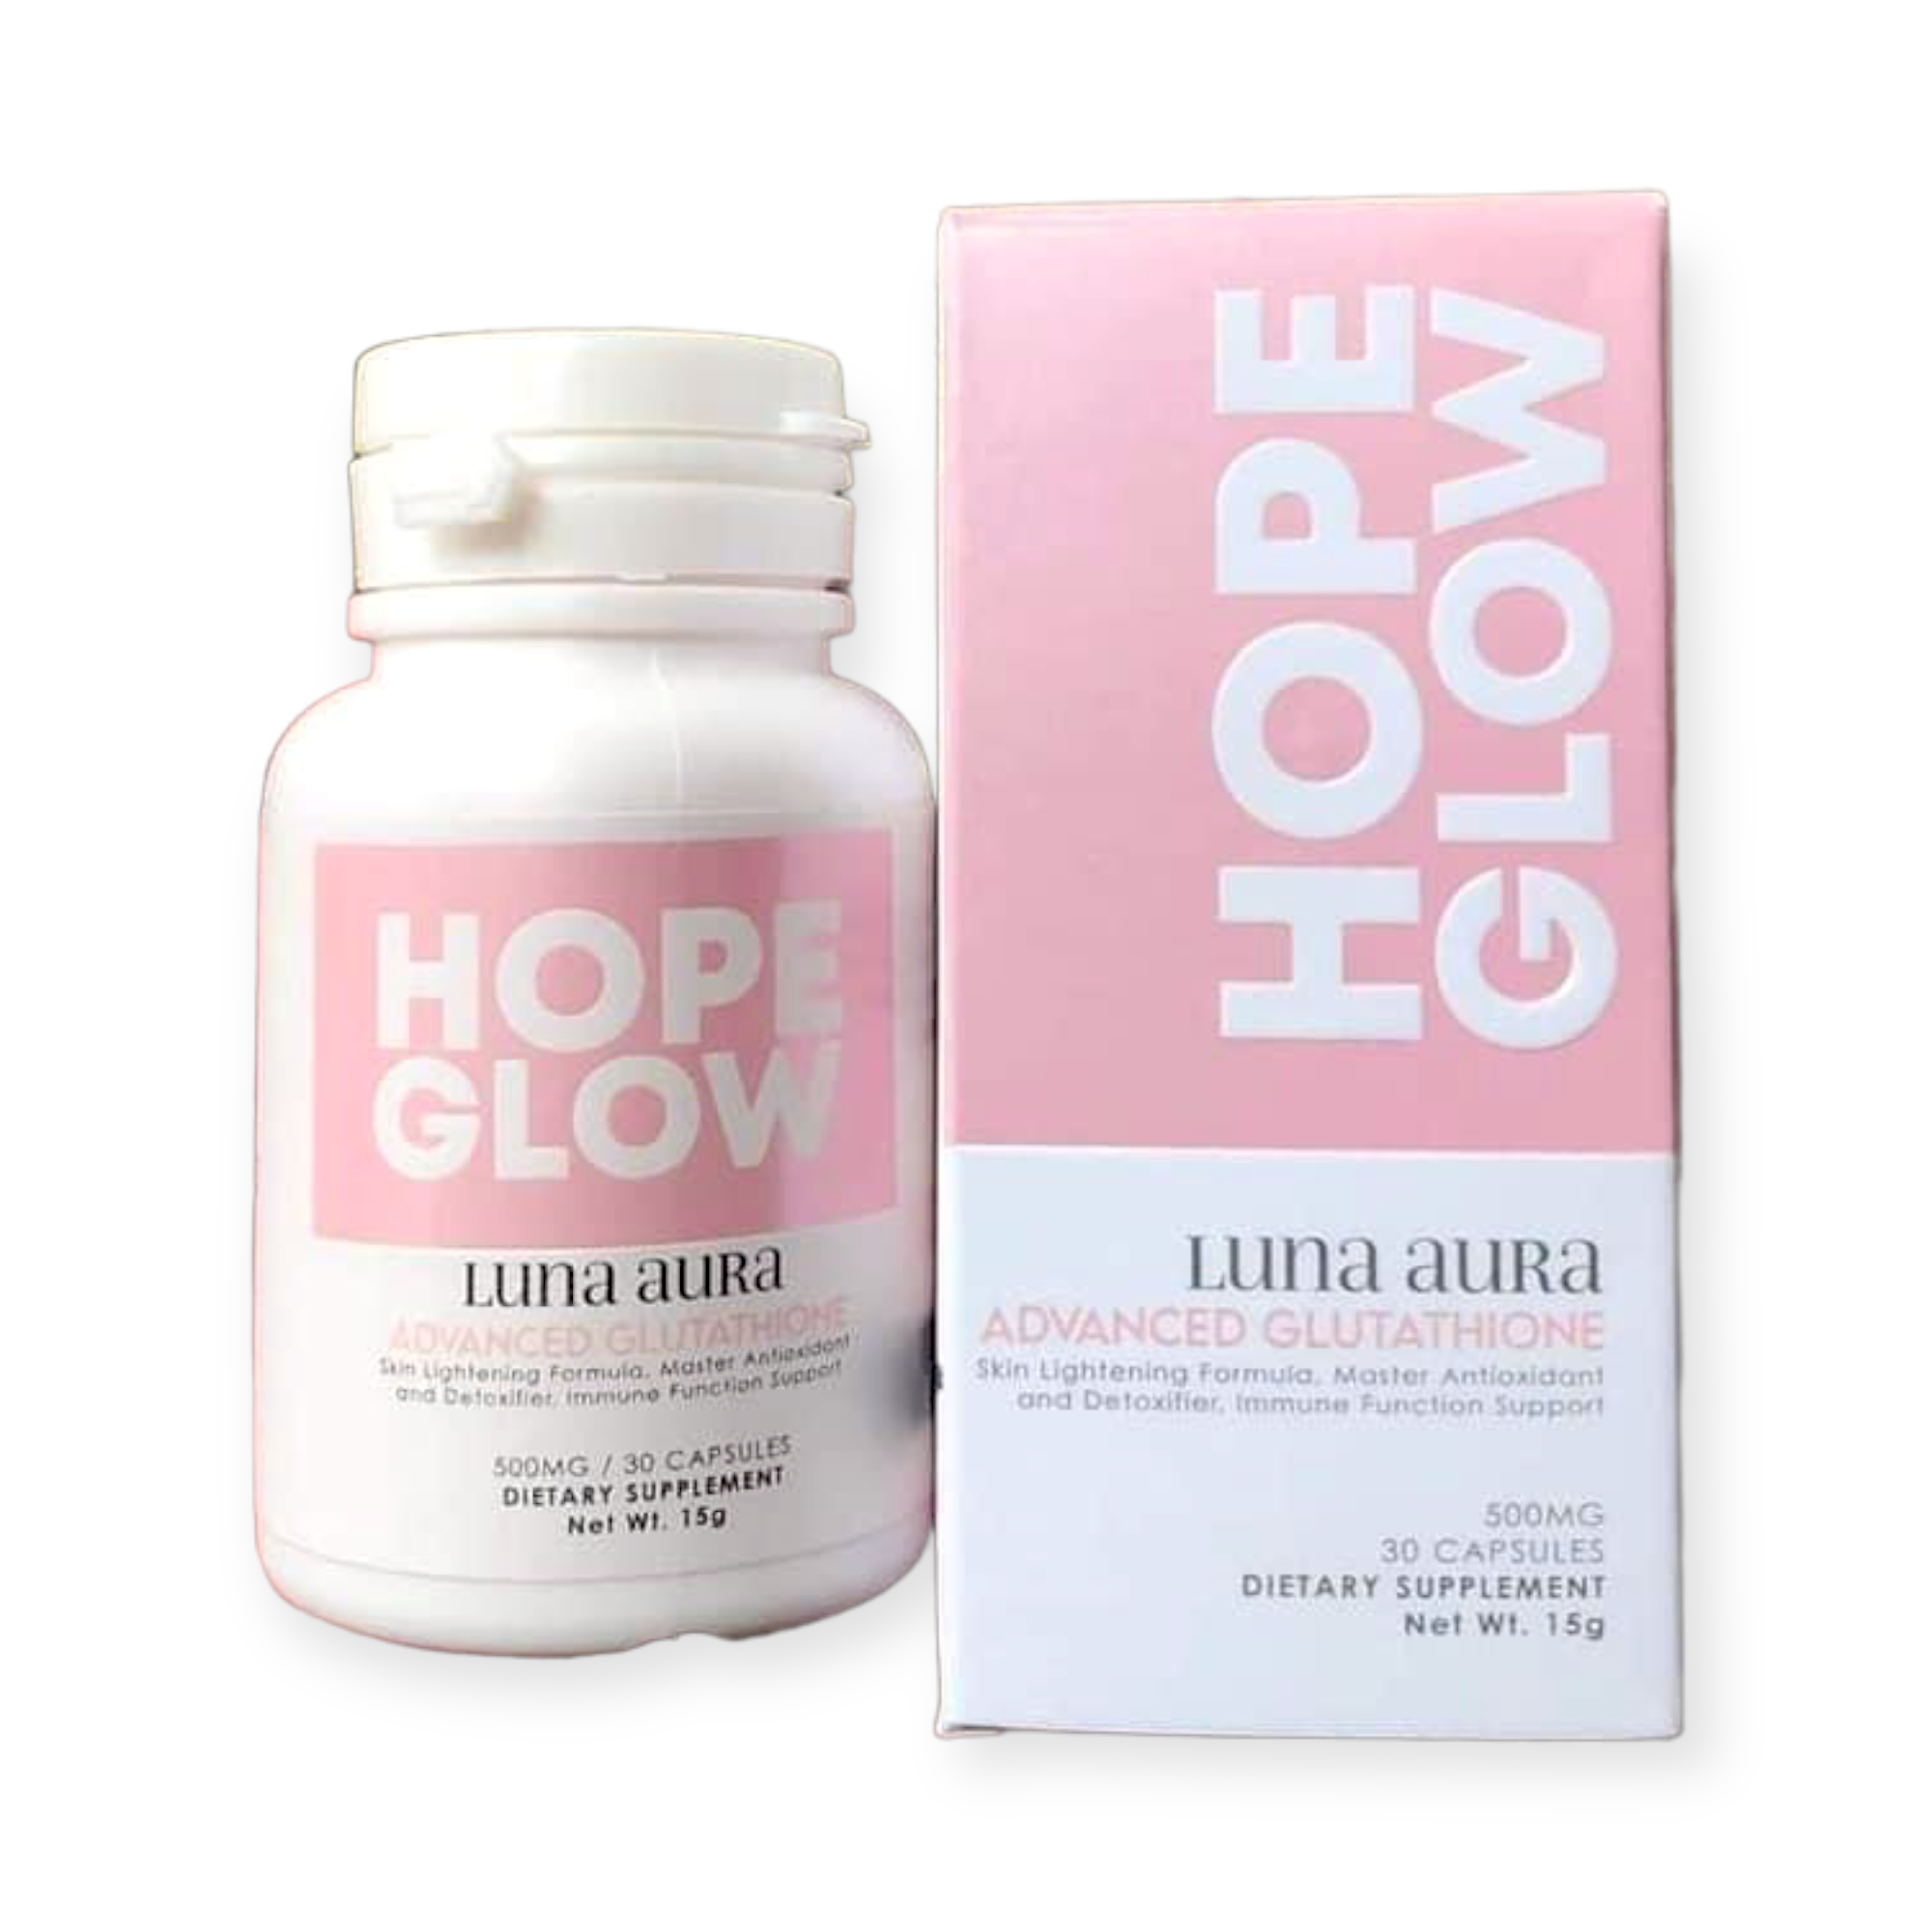 Hope Glow Luna Aura Advance Glutathione 30 Capsule My Care Kits 